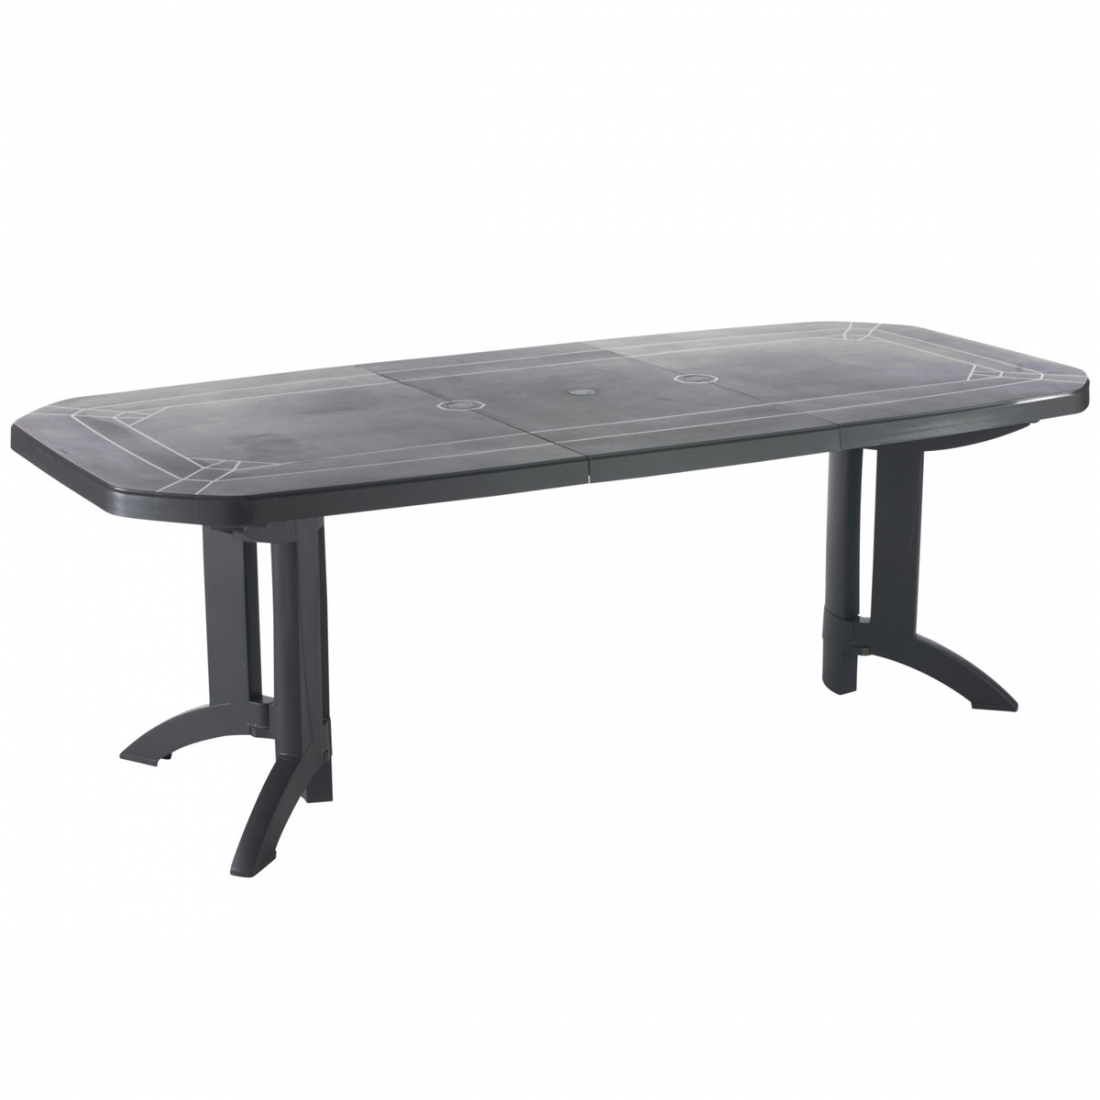 Table De Jardin Ovale Design Grosfillex Vega 220X100X72 avec Table Grosfillex Vega Auchan